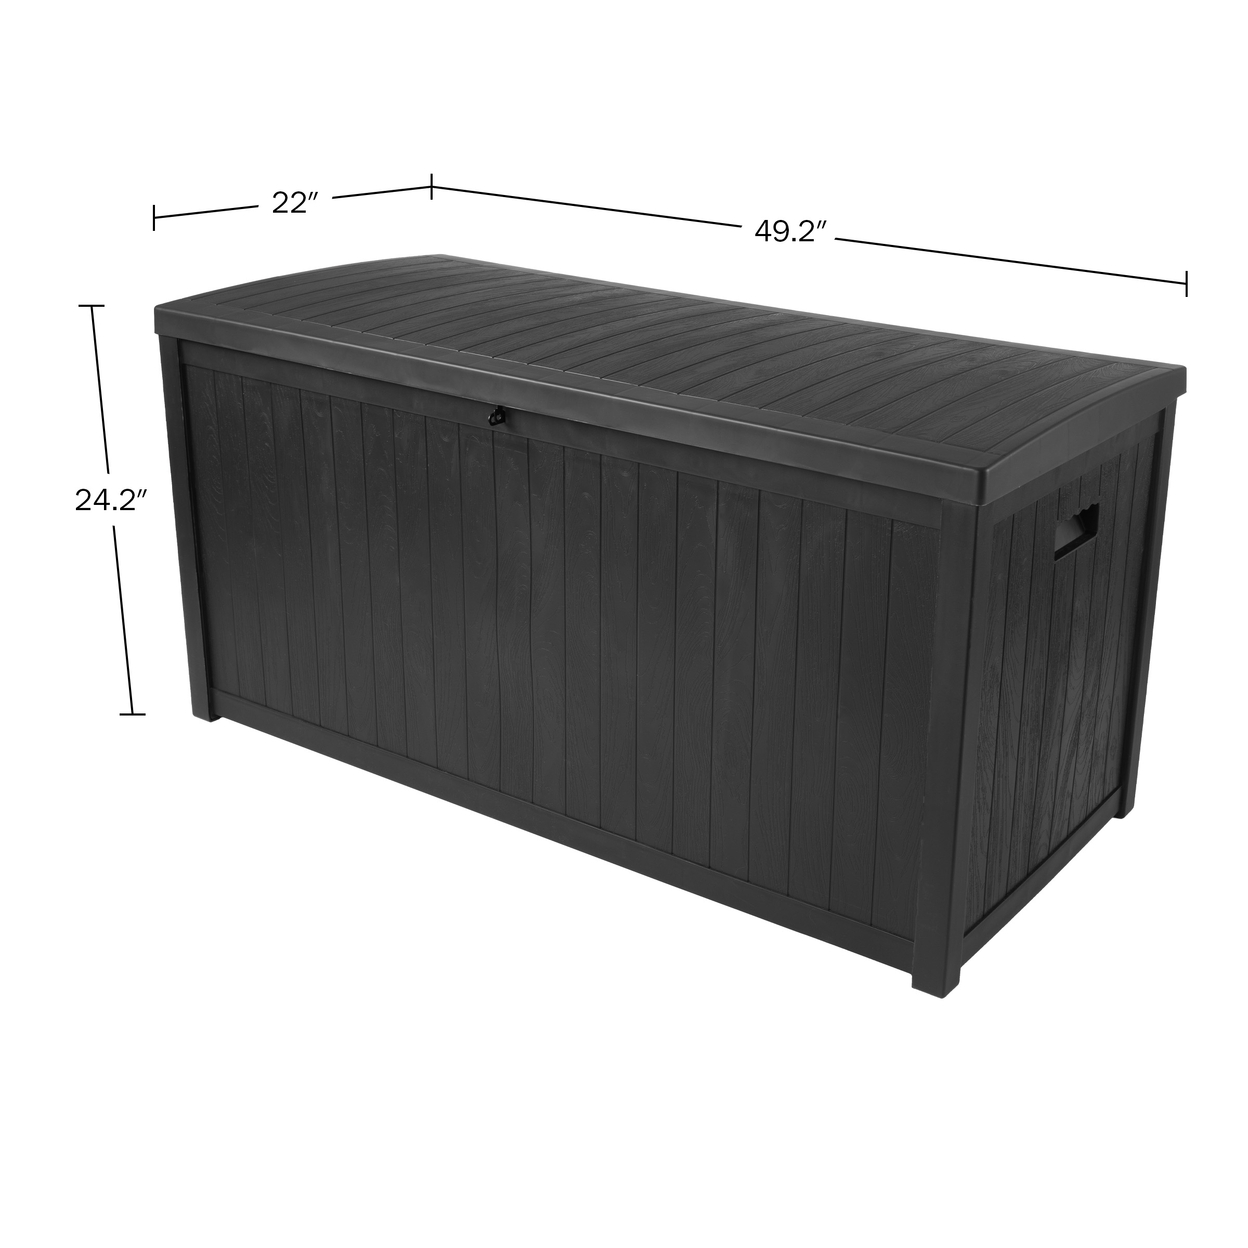 Outdoor Indoor 113 Gallon Storage Container Resin Deck Box 22 X 51.5 Inch - Black